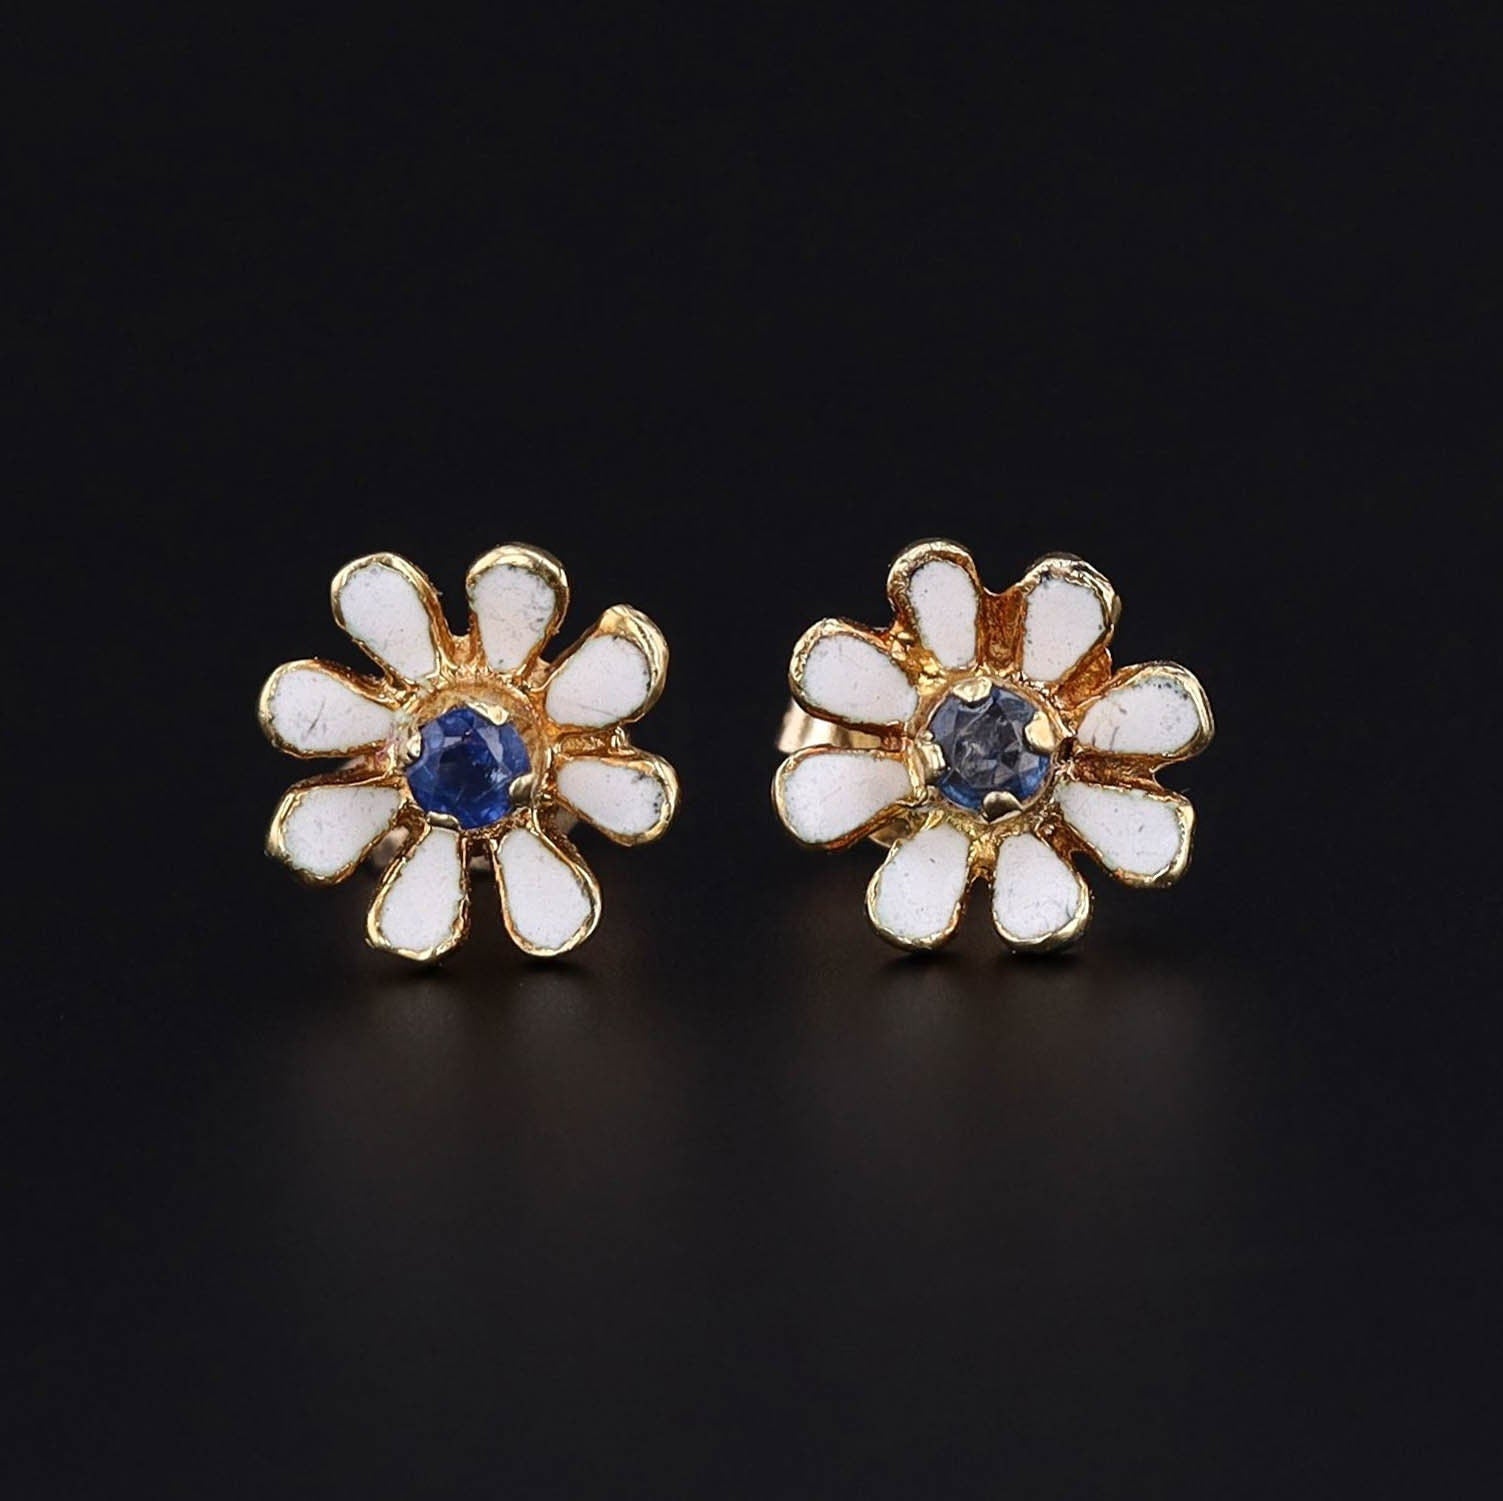 Vintage Sapphire and Enamel Flower Earrings of 14k Gold